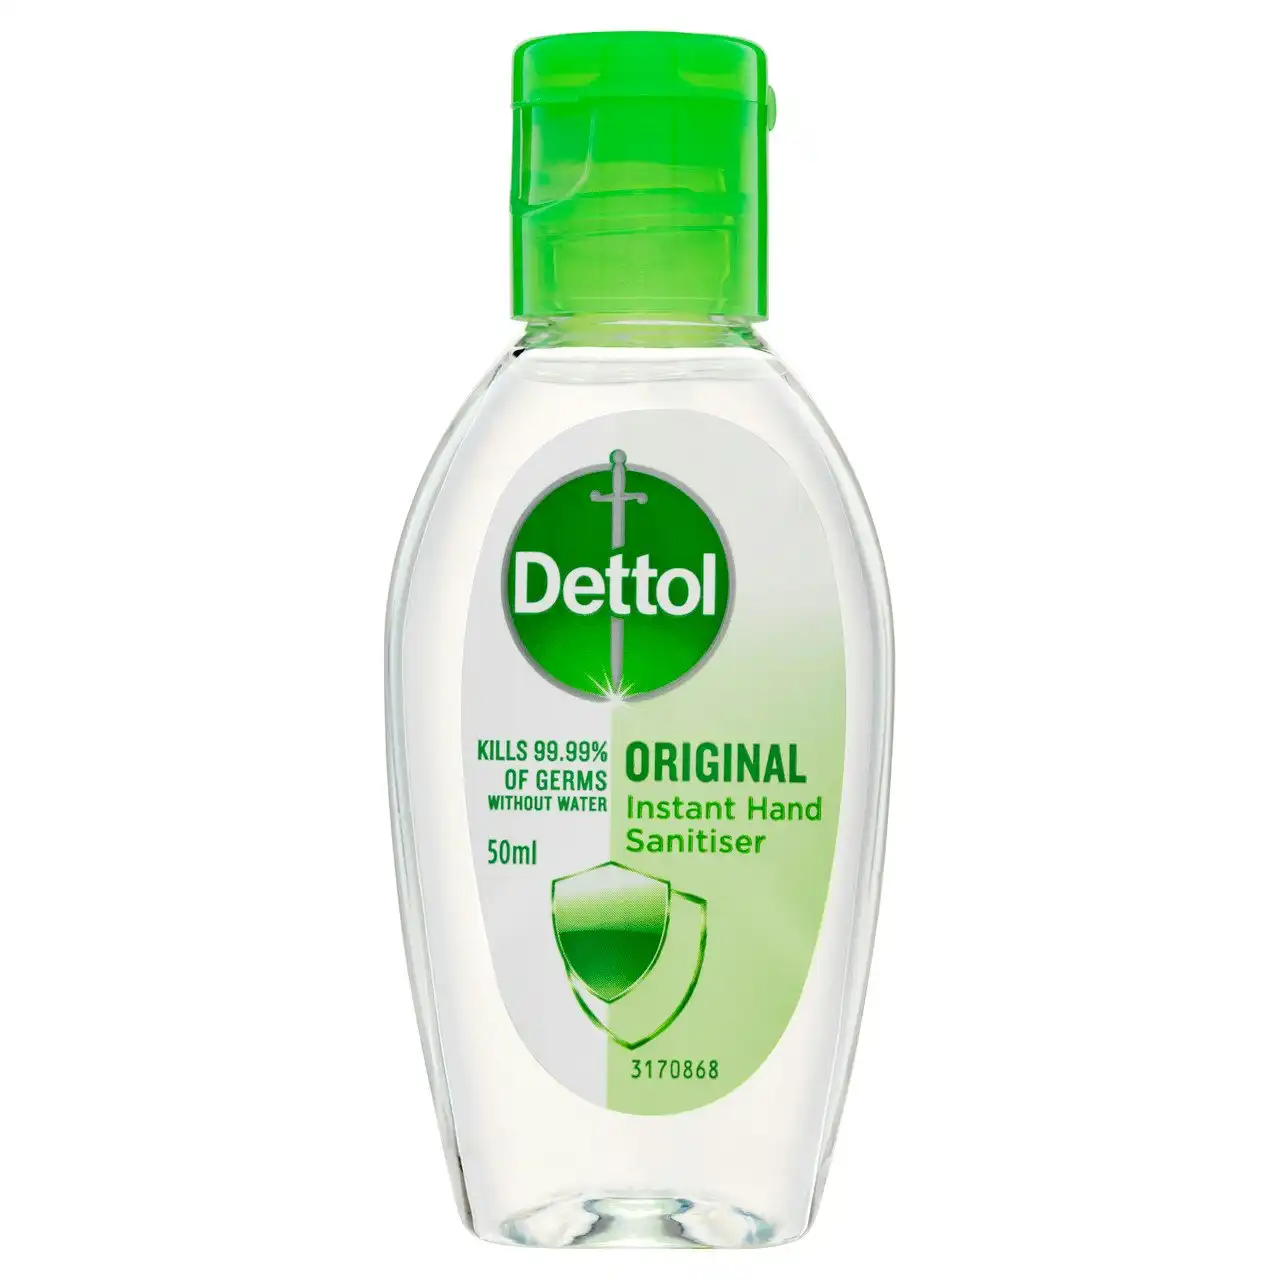 Dettol Healthy Touch Liquid Antibacterial Instant Hand Sanitiser 50mL